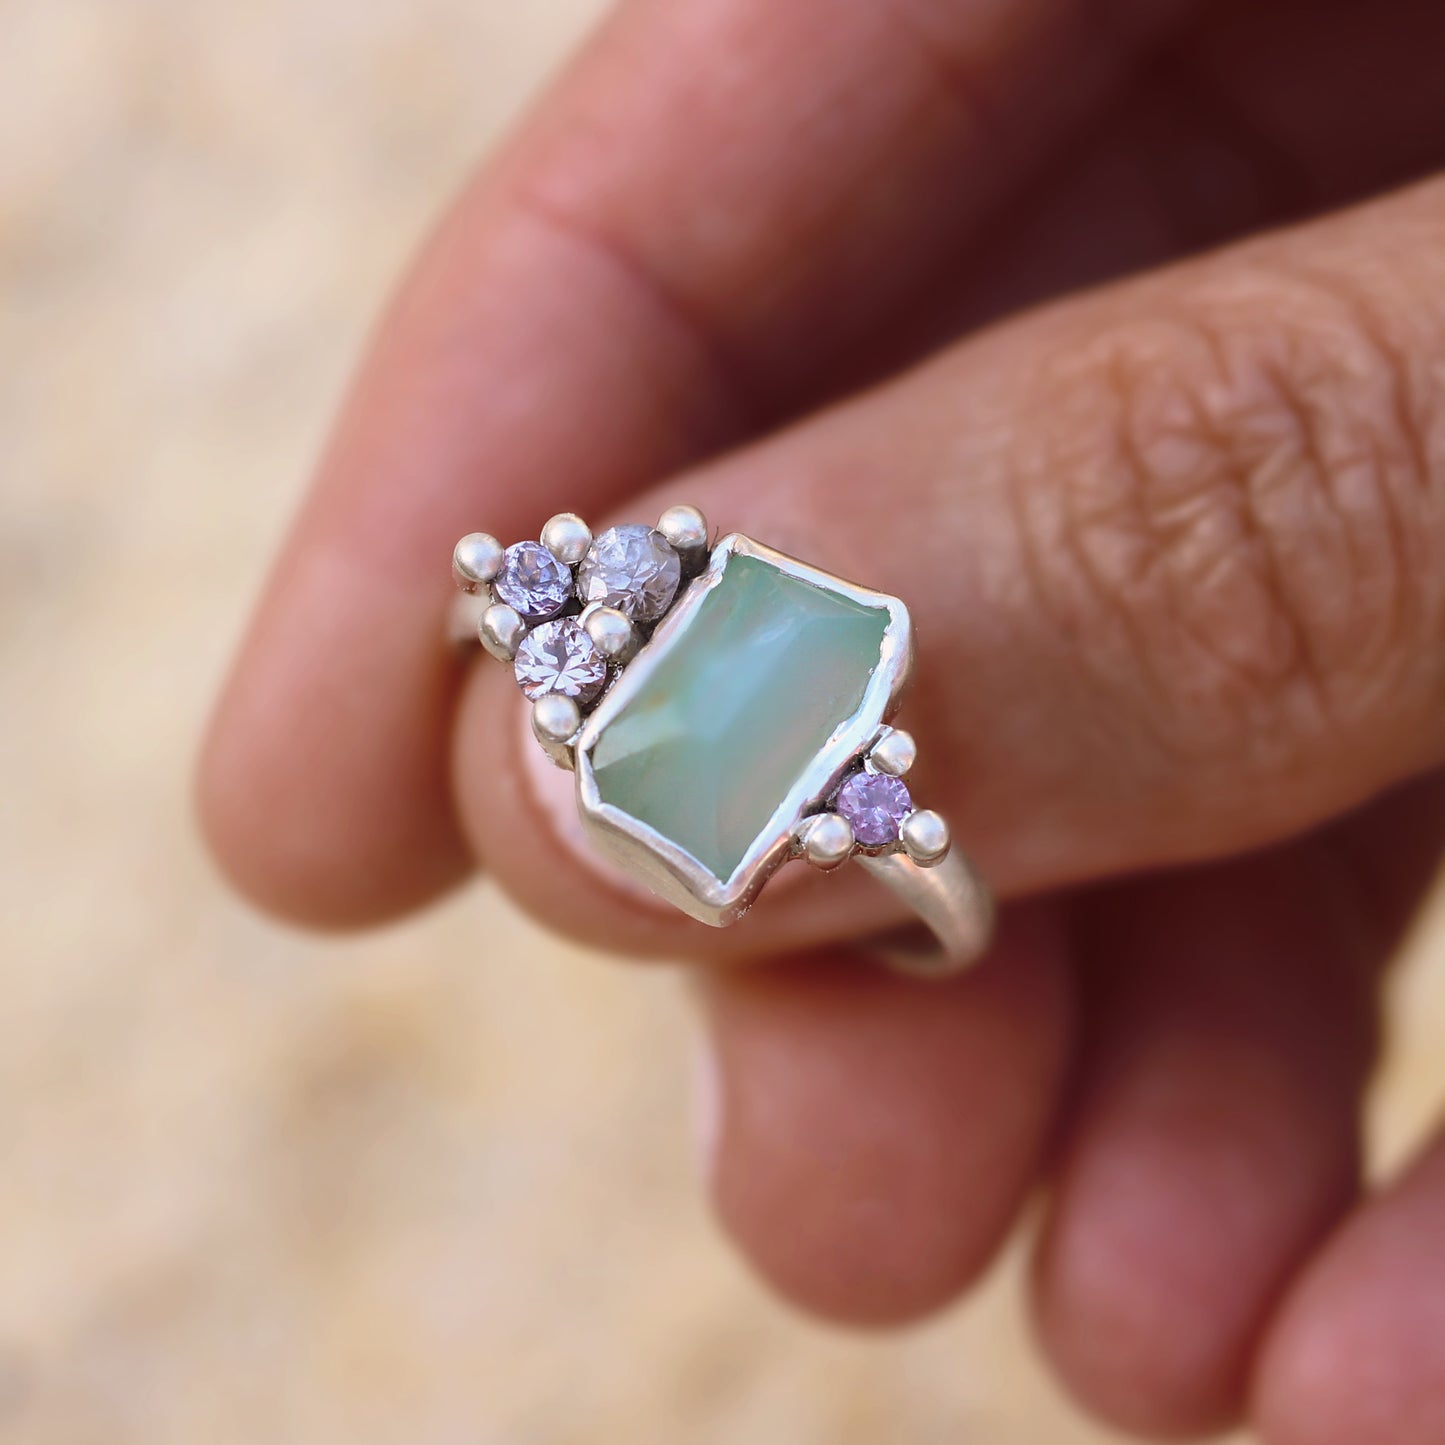 Opal Reef Mermaid Ring - Peruvian opal